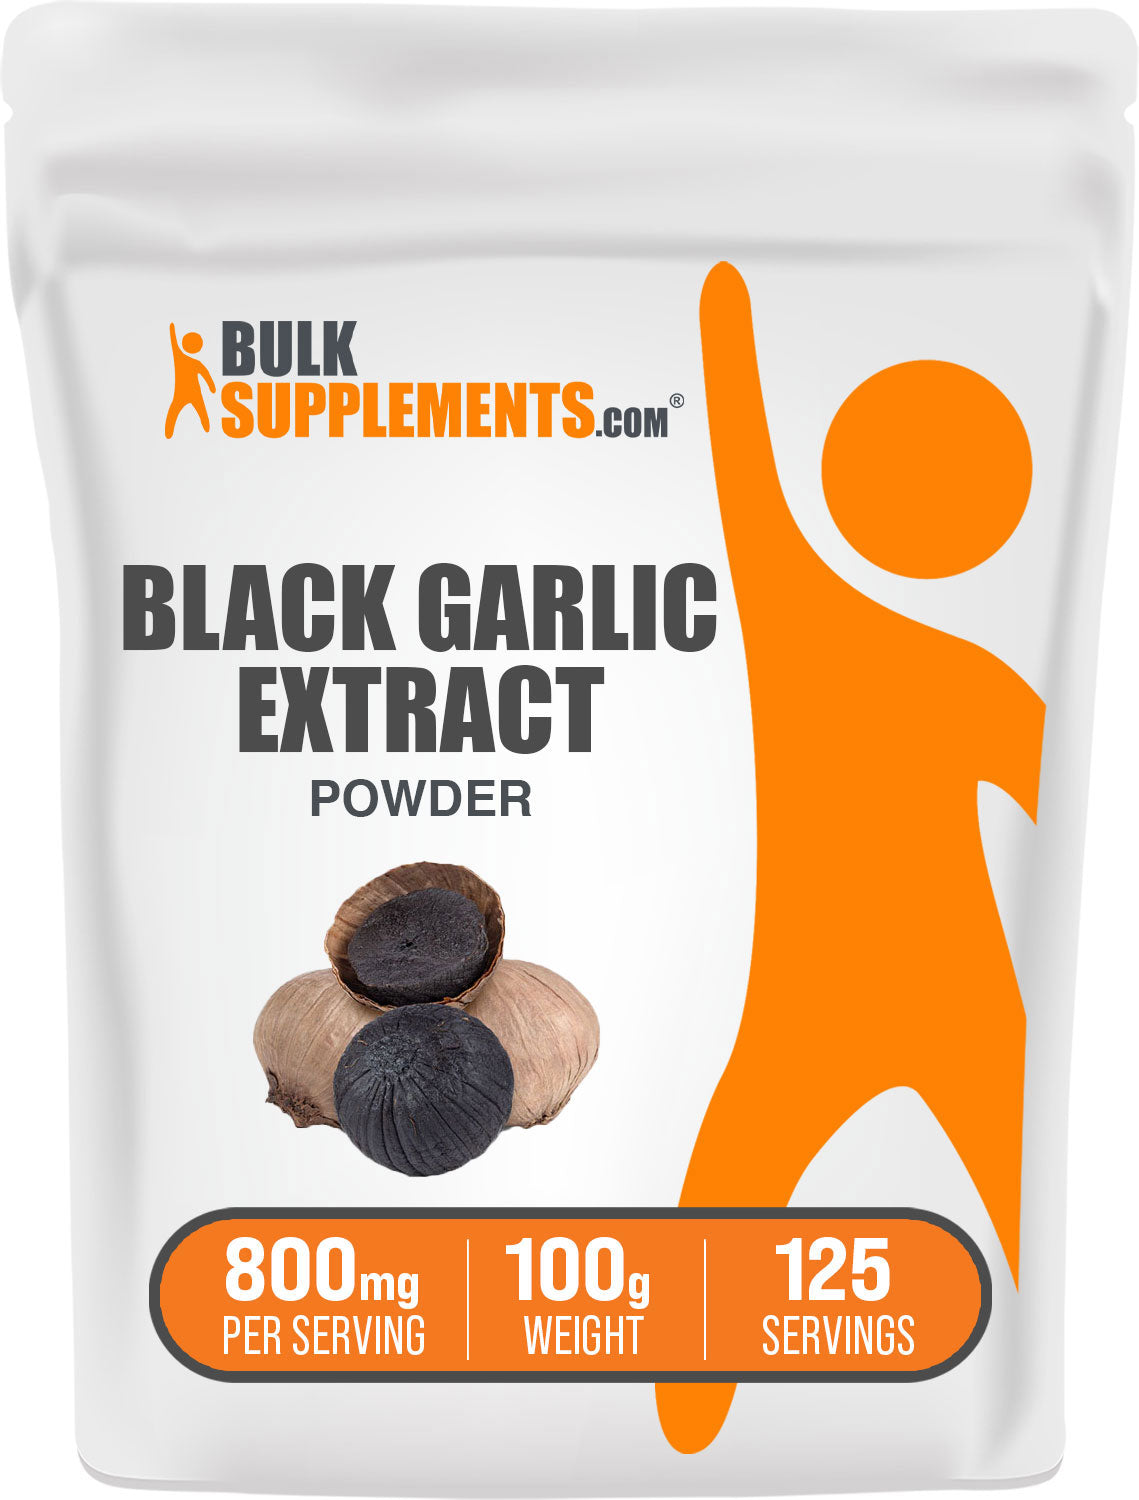 BulkSupplements.com Black garlic extract powder bag 100g